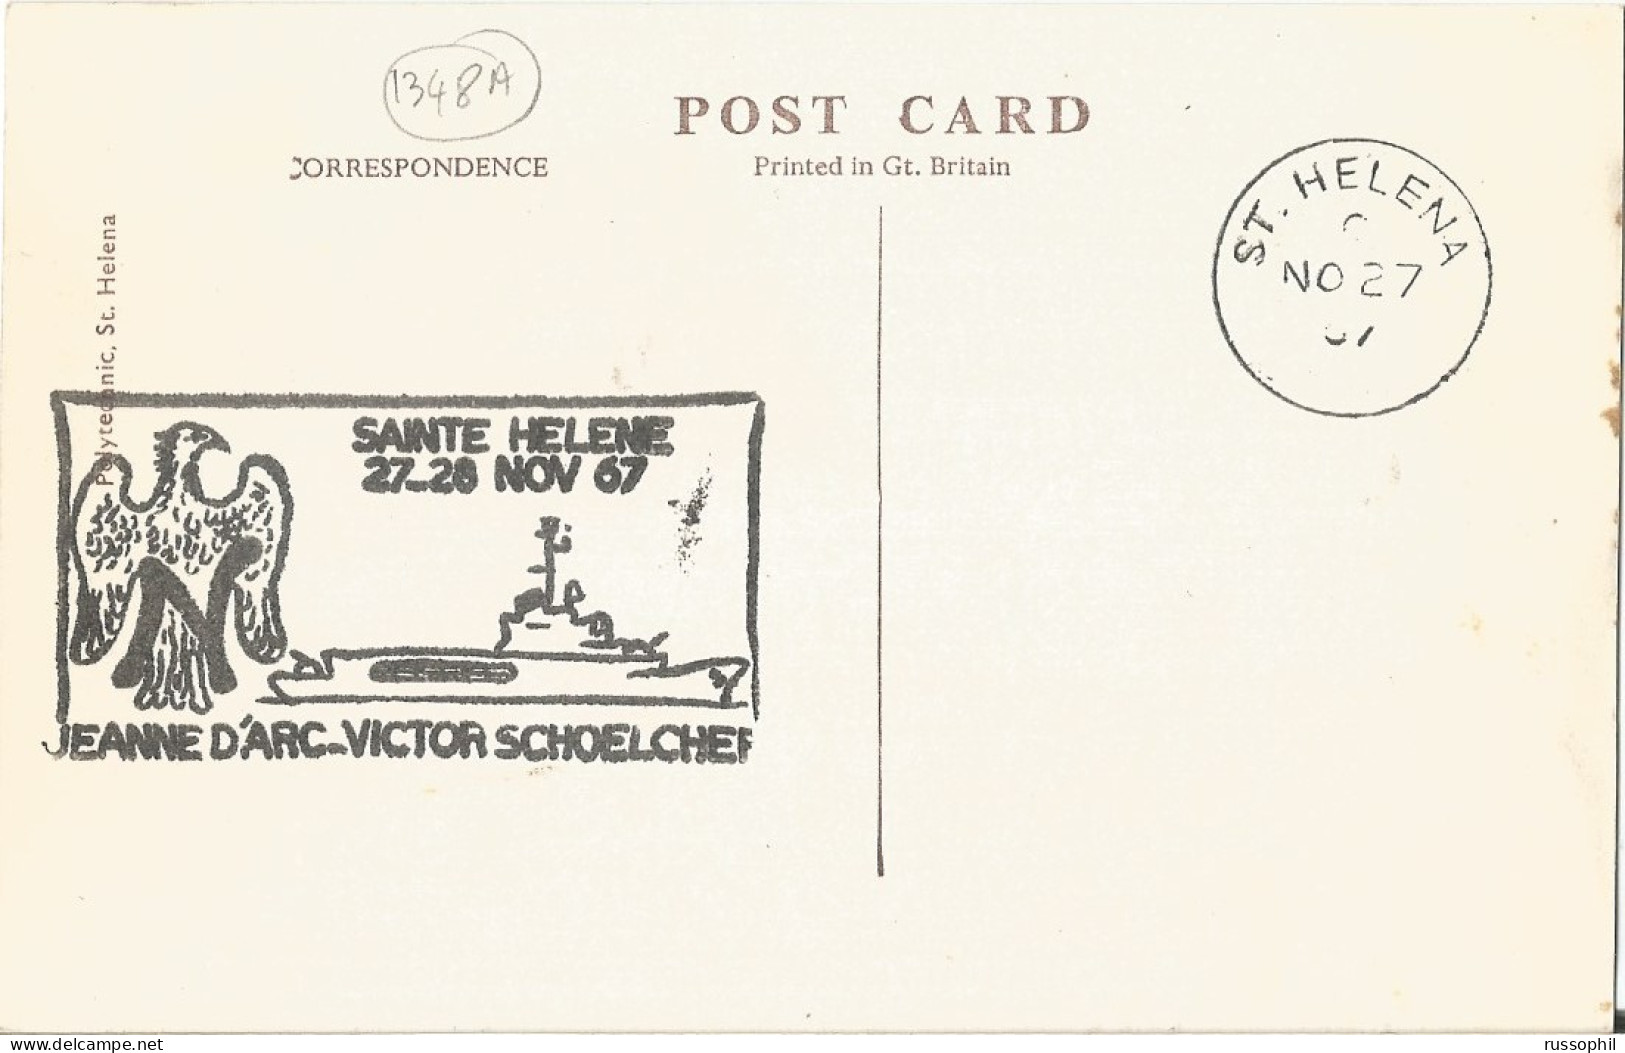 ST HELENA - LONGWOOD OLD HOUSE - PUB. POLYTECHNIC, ST  HELENA REF #3 - FRENCH WAR SHIP " JEANNE D'ARC " - 1967 - Sainte-Hélène